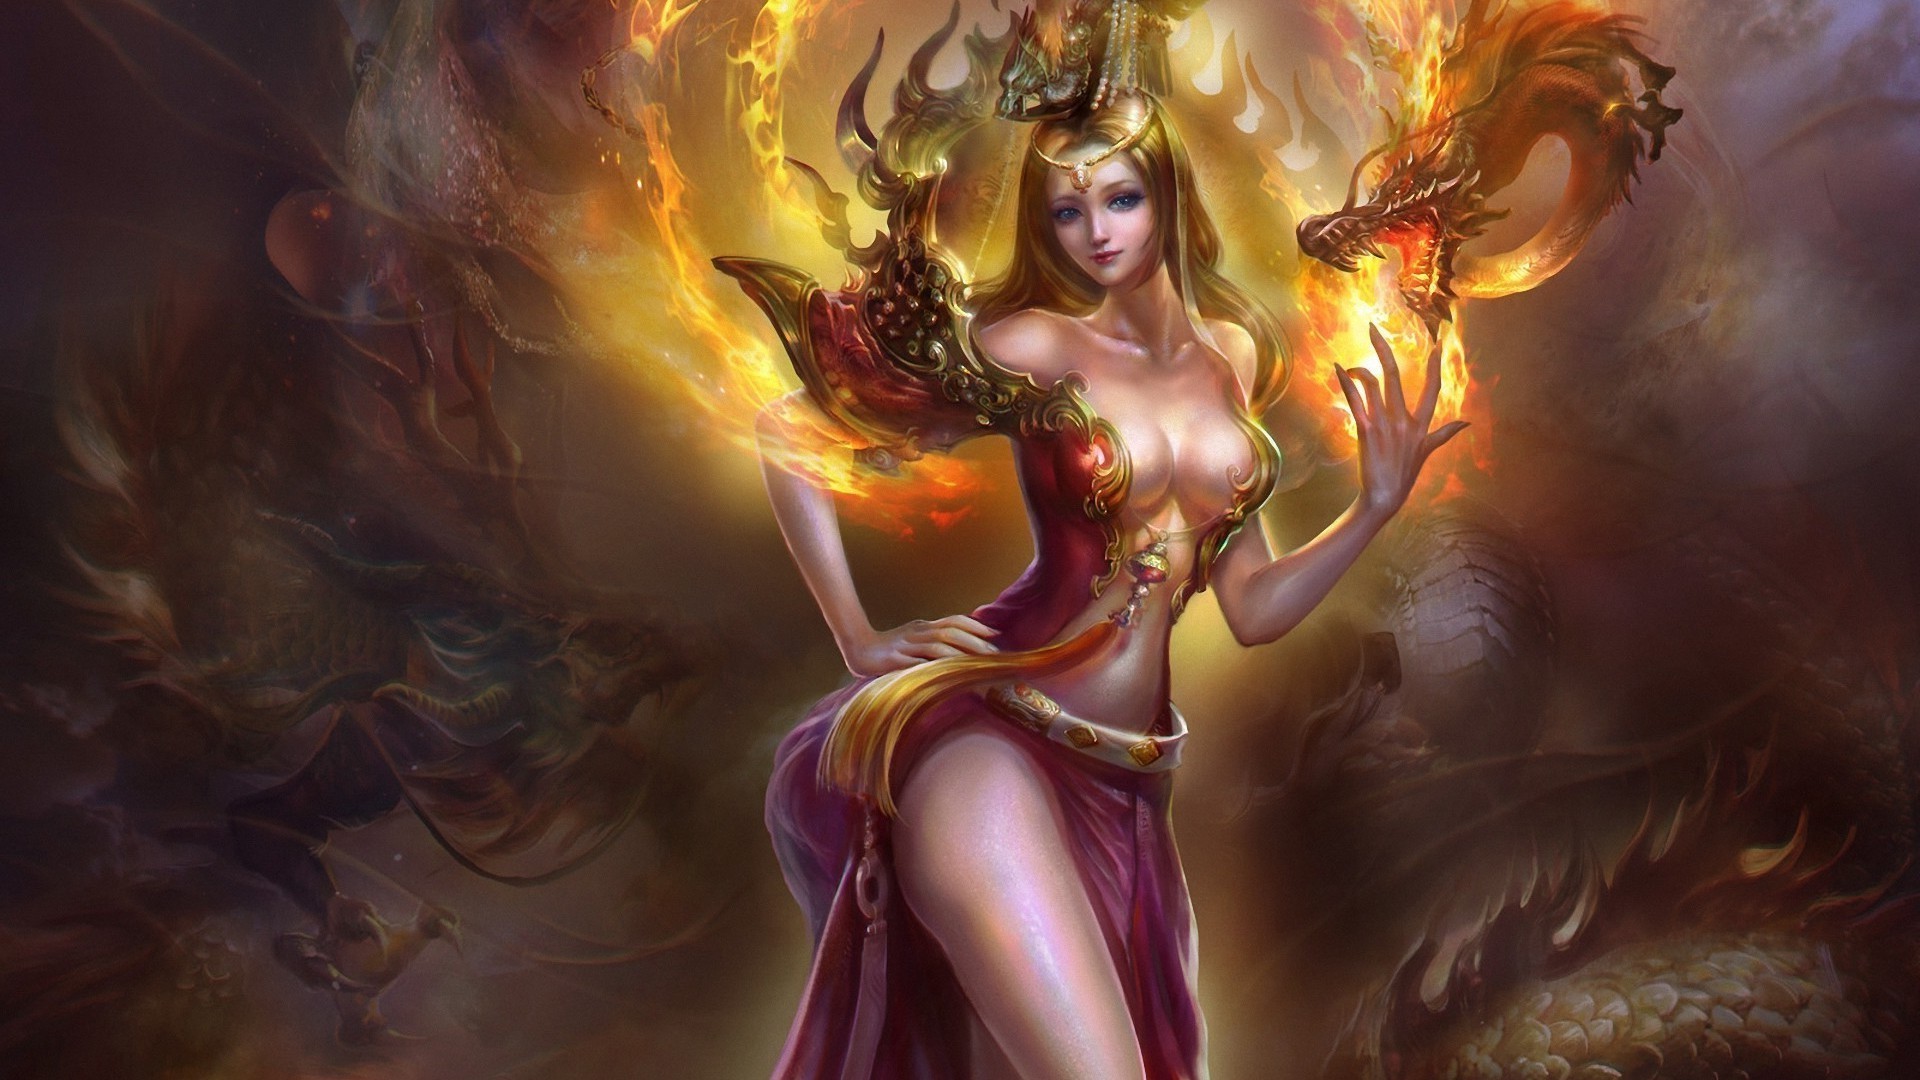 dragons art fantasy woman magic religion girl